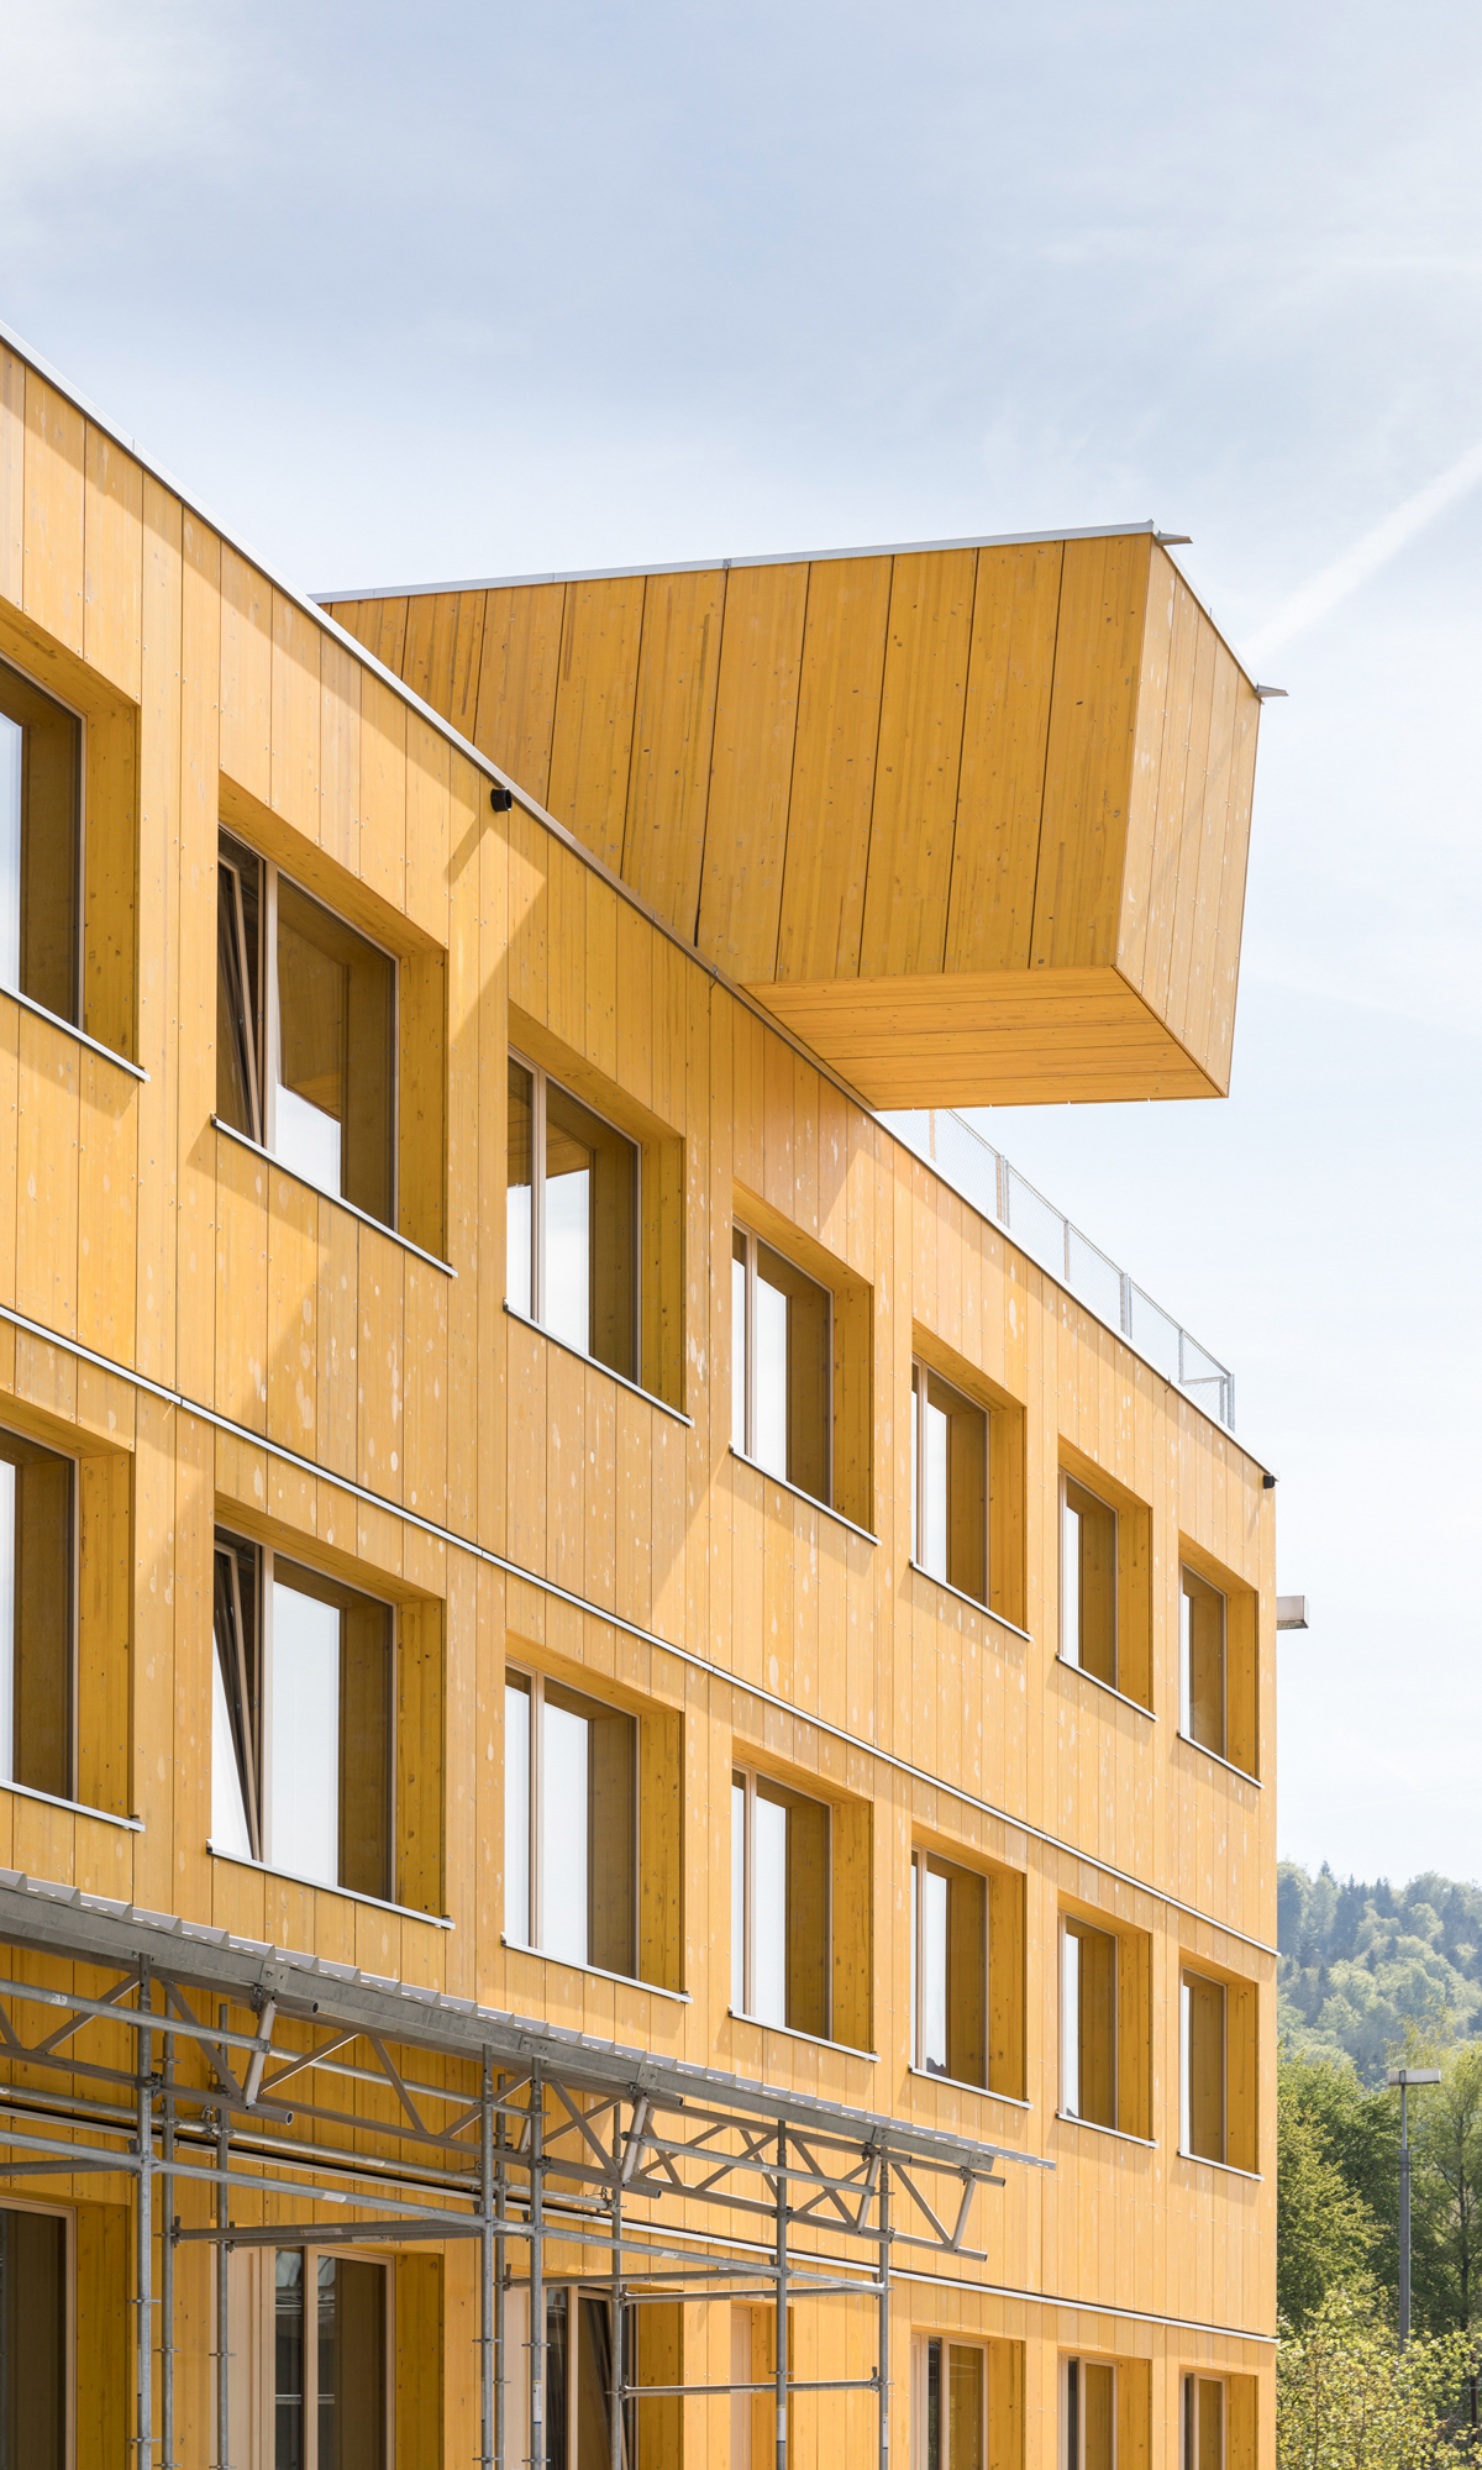 Facade view of the Lattich building in St. Gallen